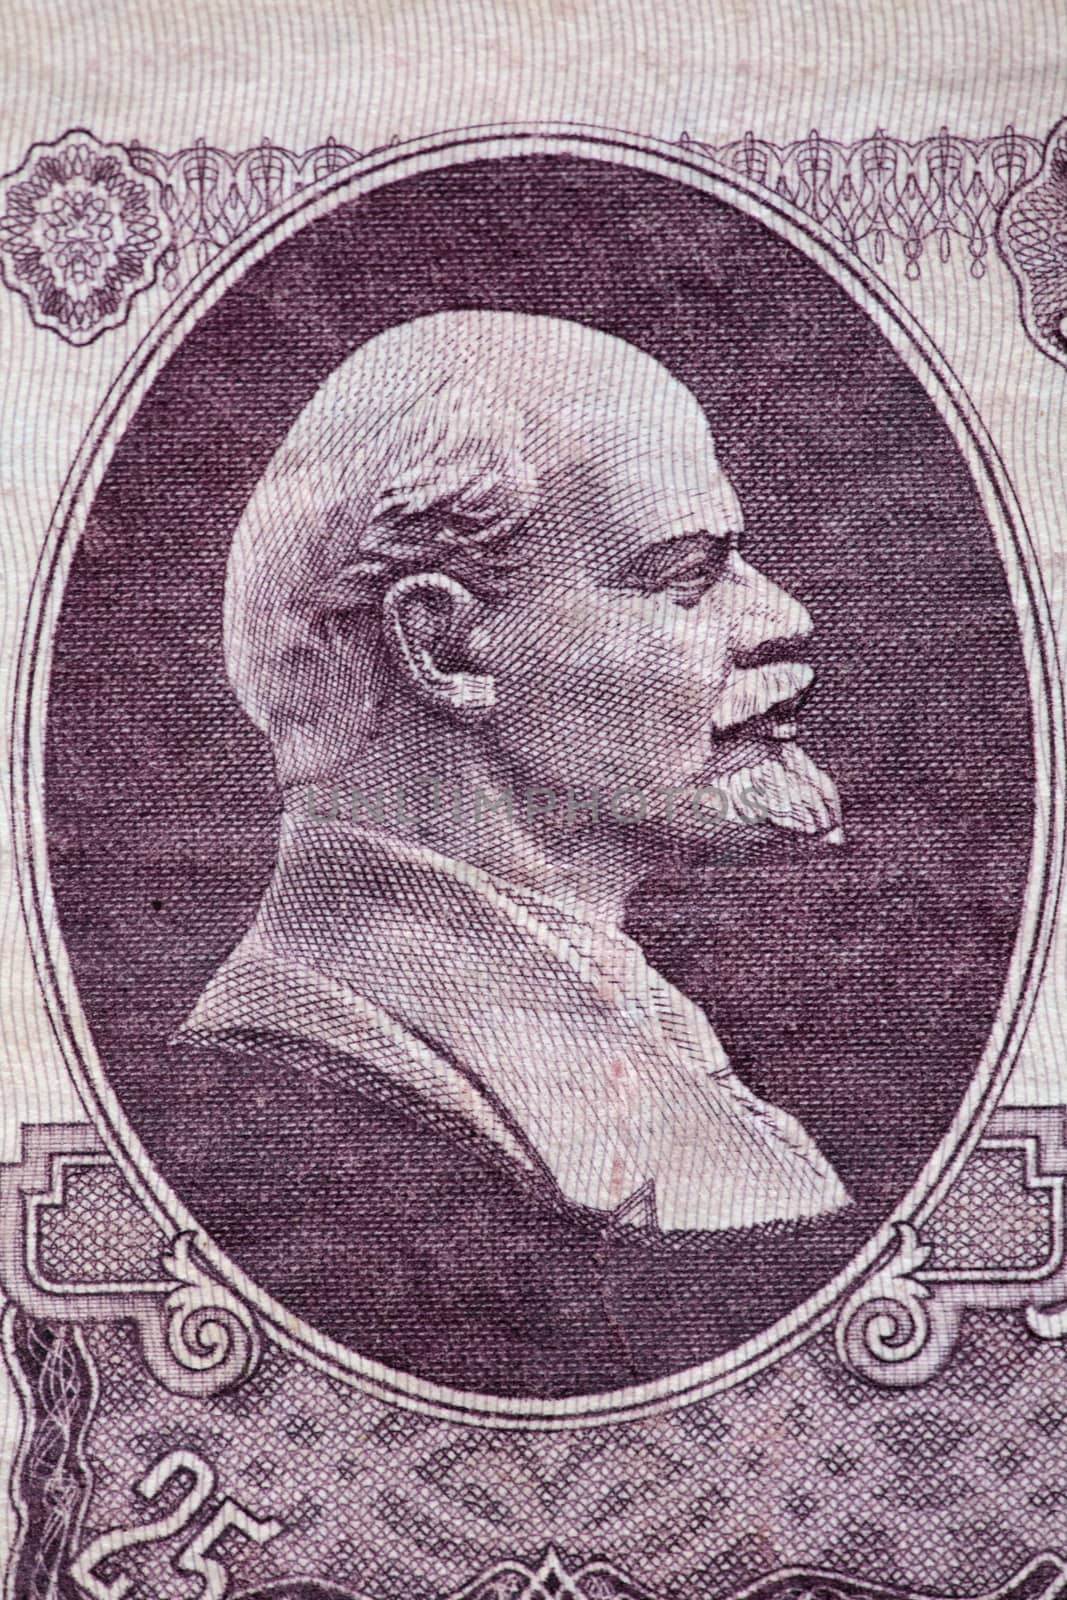 Vladimir Lenin profile portrait on the banknote by mrivserg